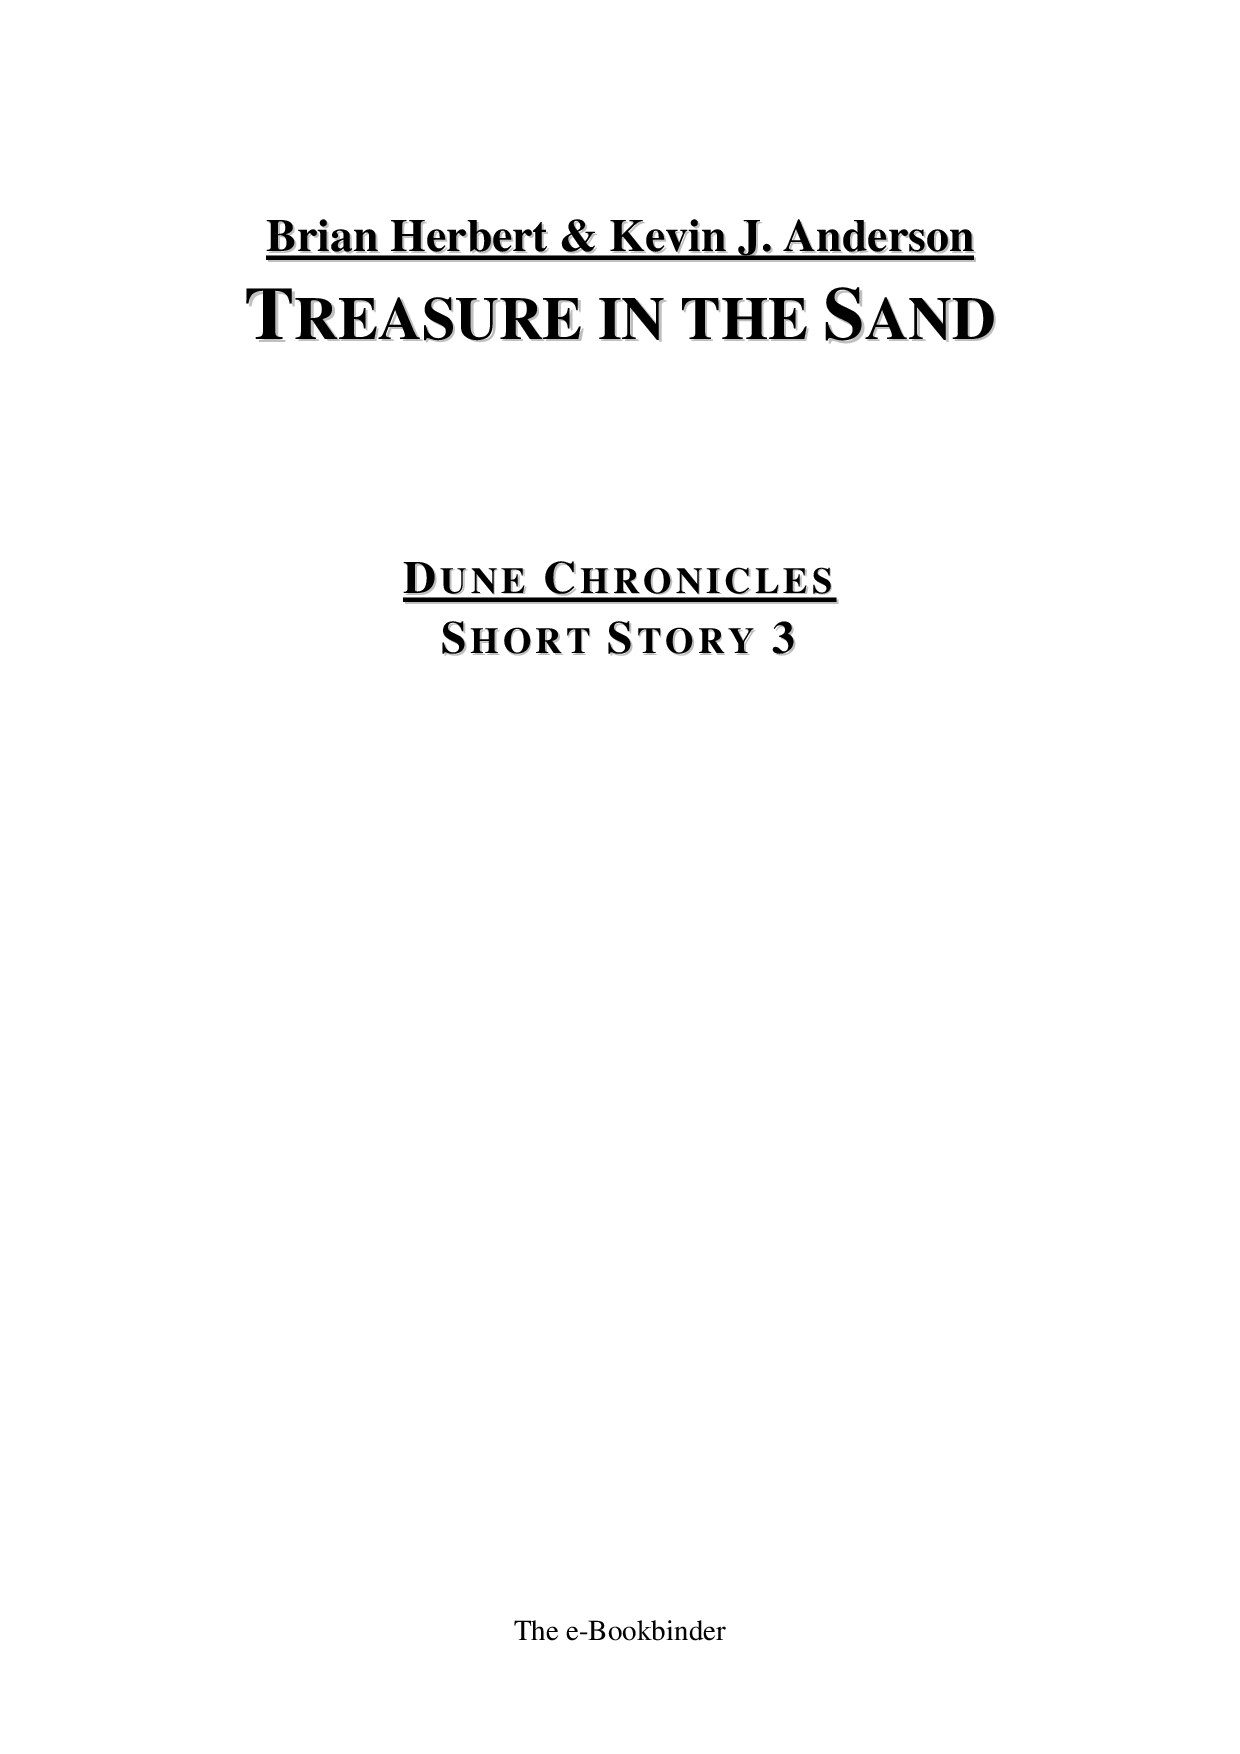 Brian Herbert & Kevin J. Anderson - Dune SS 03 - Treasure in the Sand